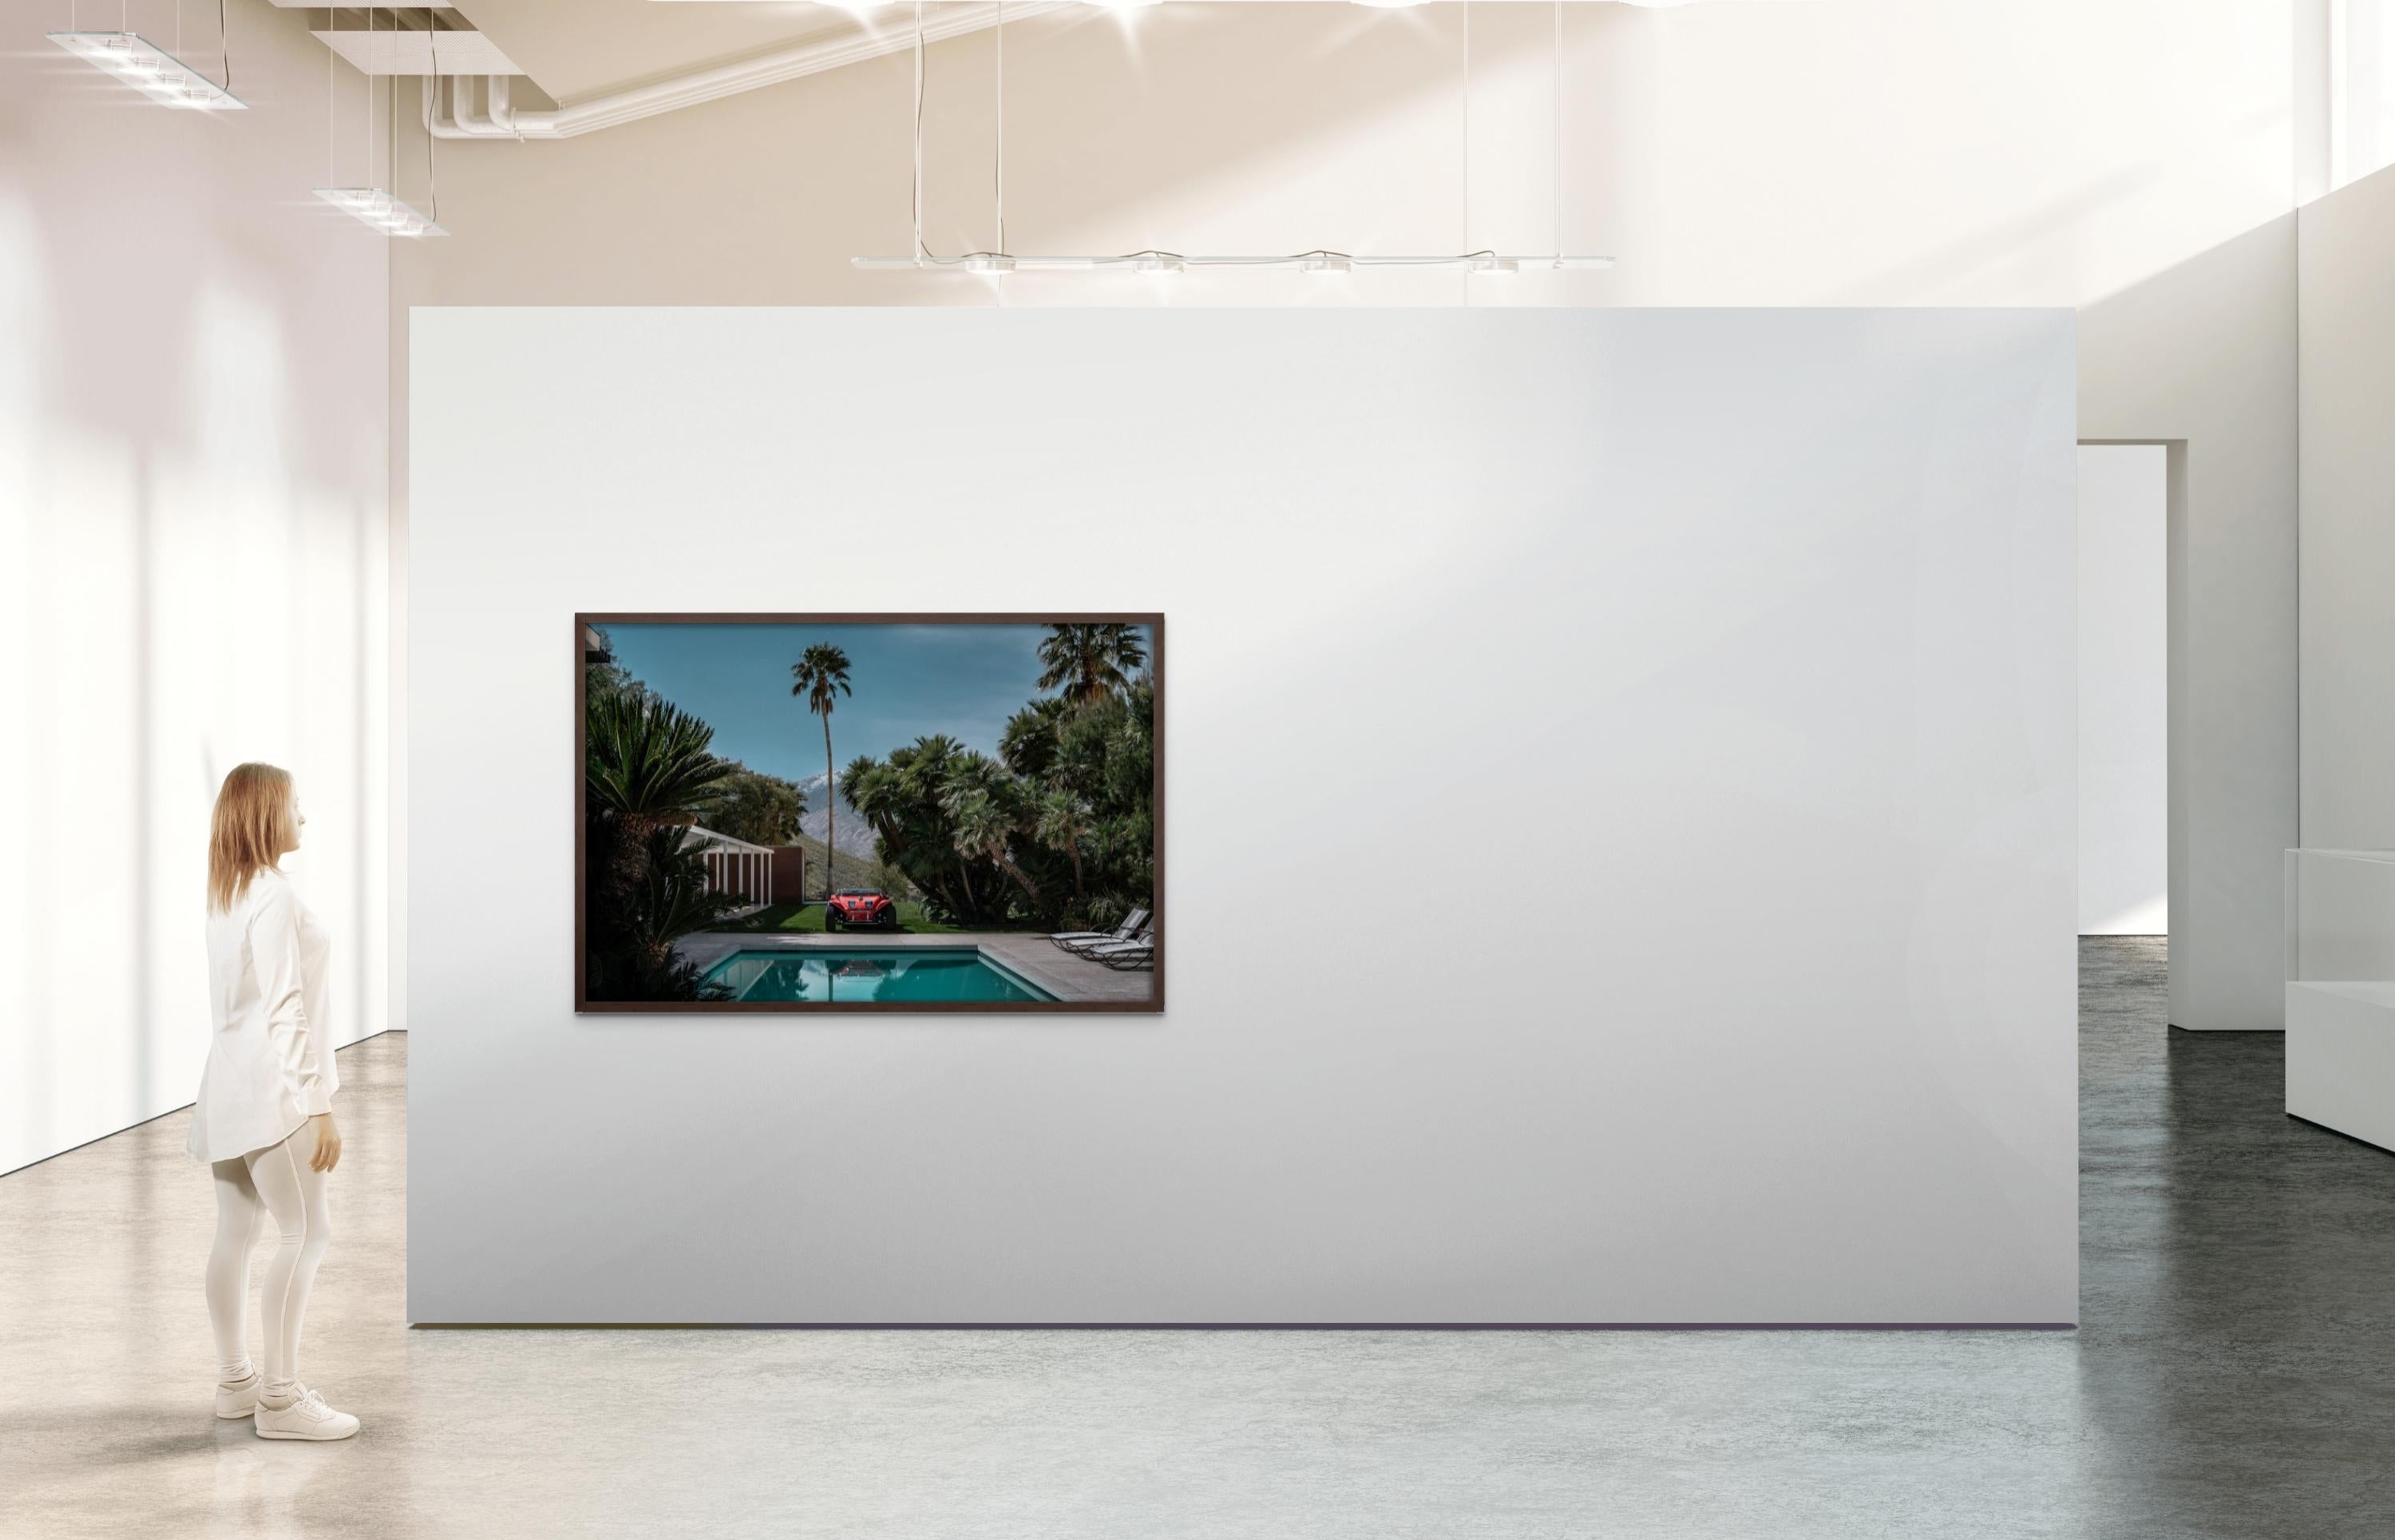 Pool du milieu du siècle dernier de Steve McQueen, architecture Midnight Modern de Palm Springs - Print de Tom Blachford